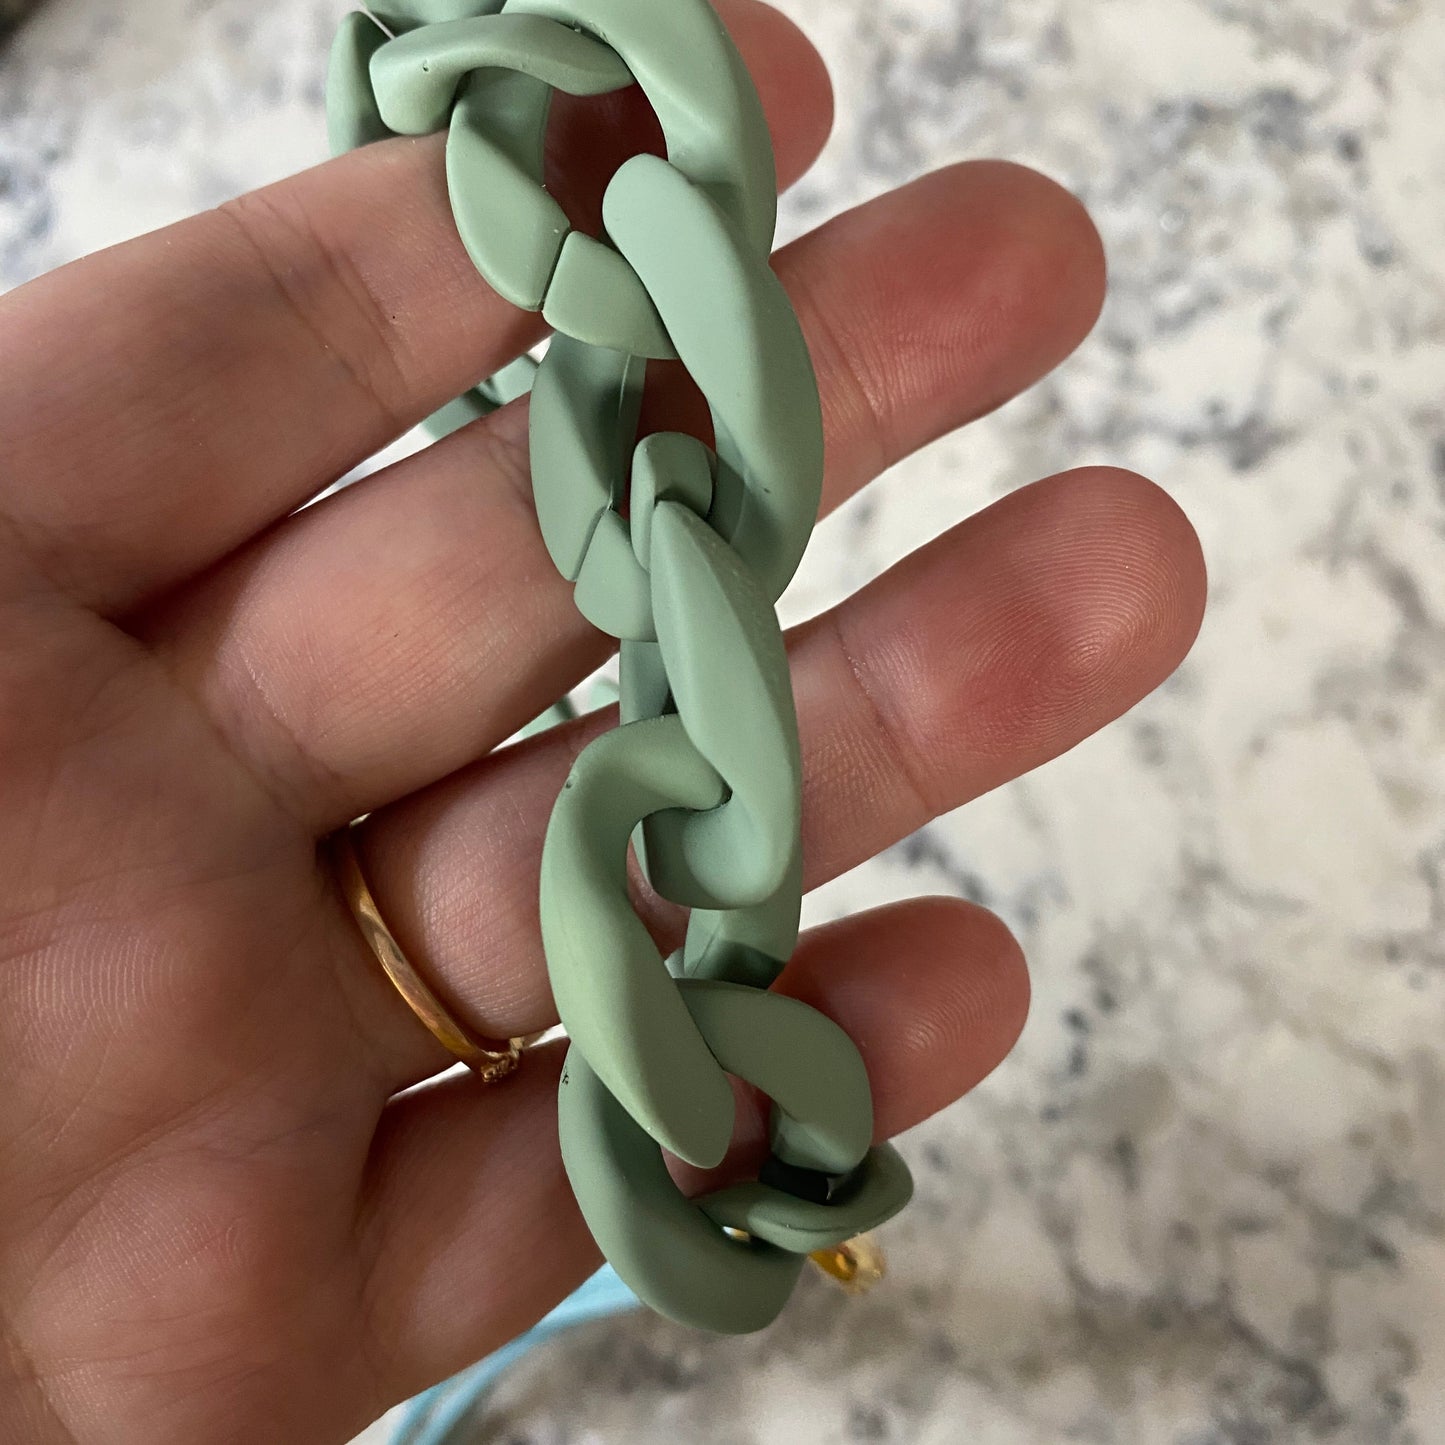 Keychain - Link Bracelet with Tassel